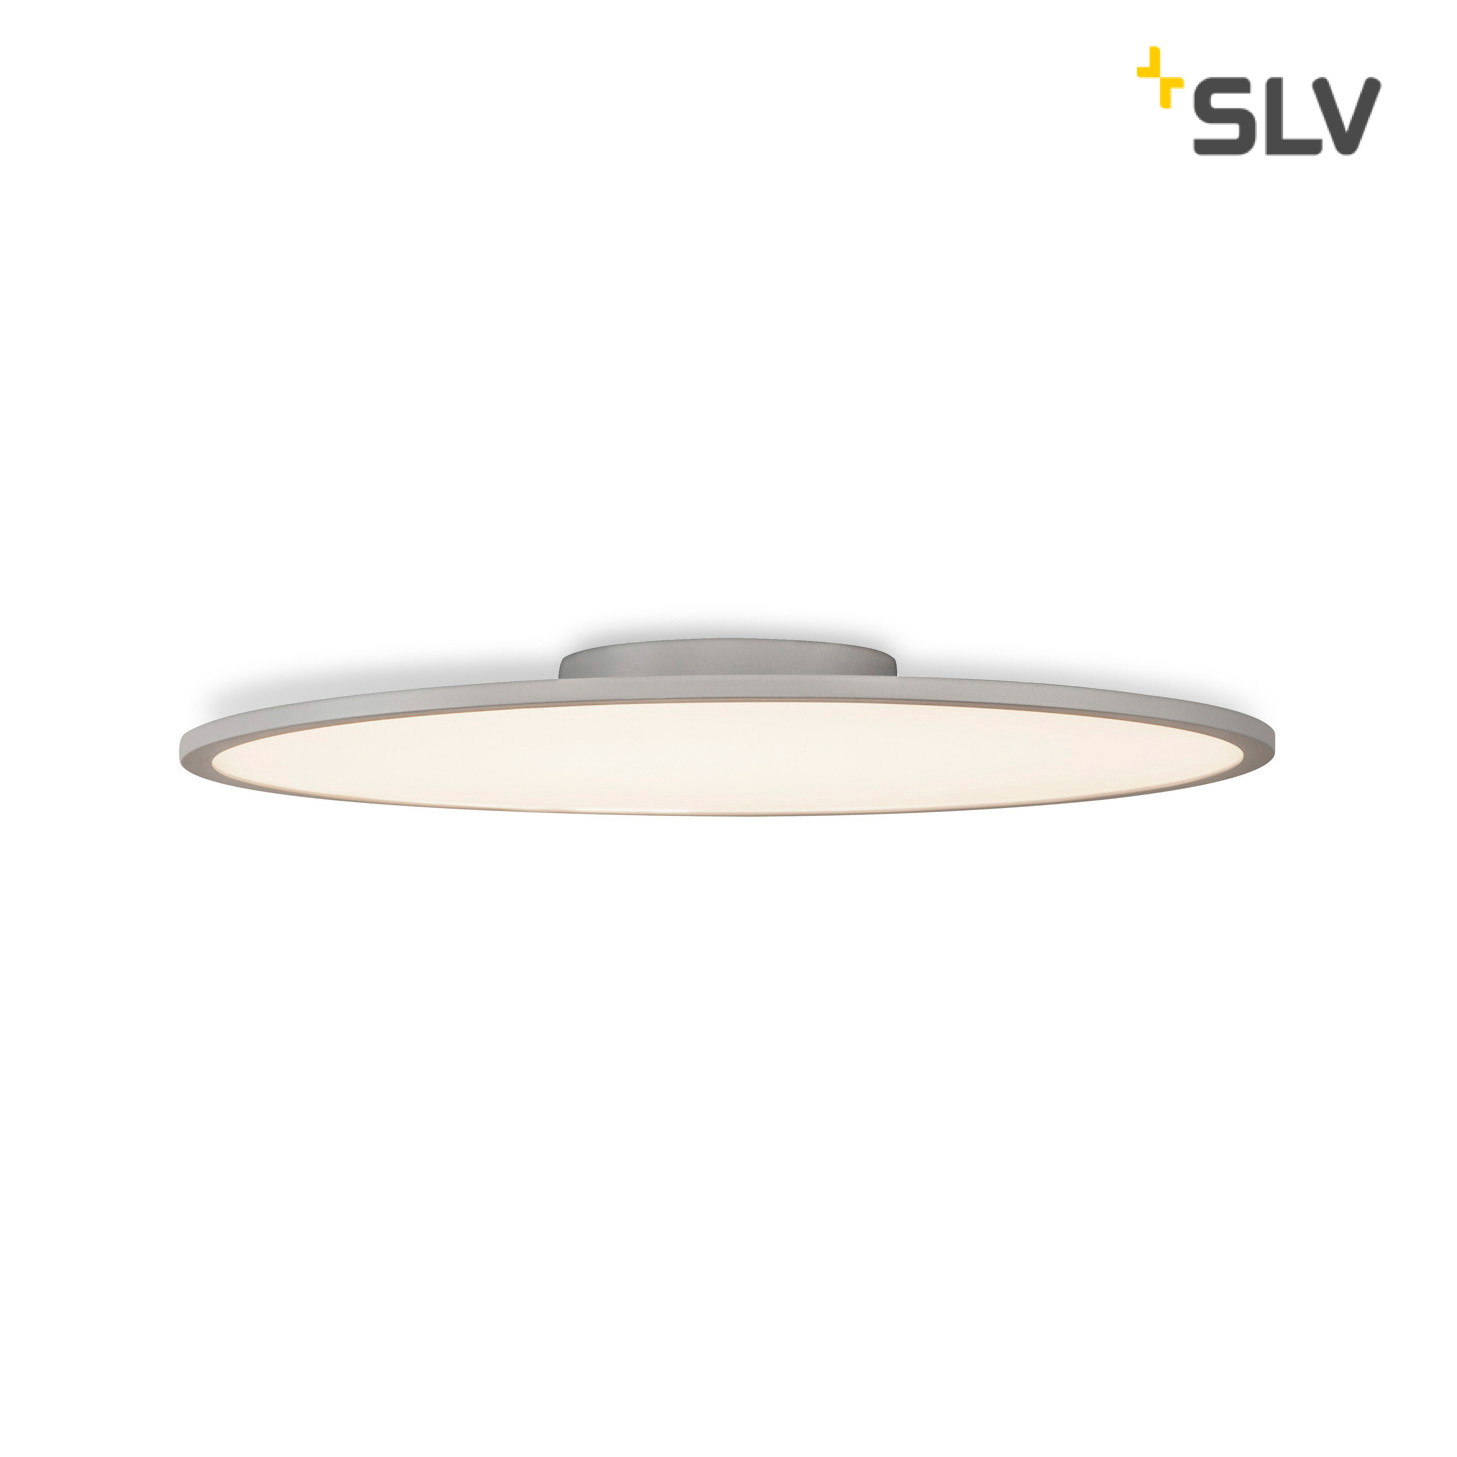 SLV Panel 60 LED Ceiling Light round silver grey 3150lm 3000K CRI80